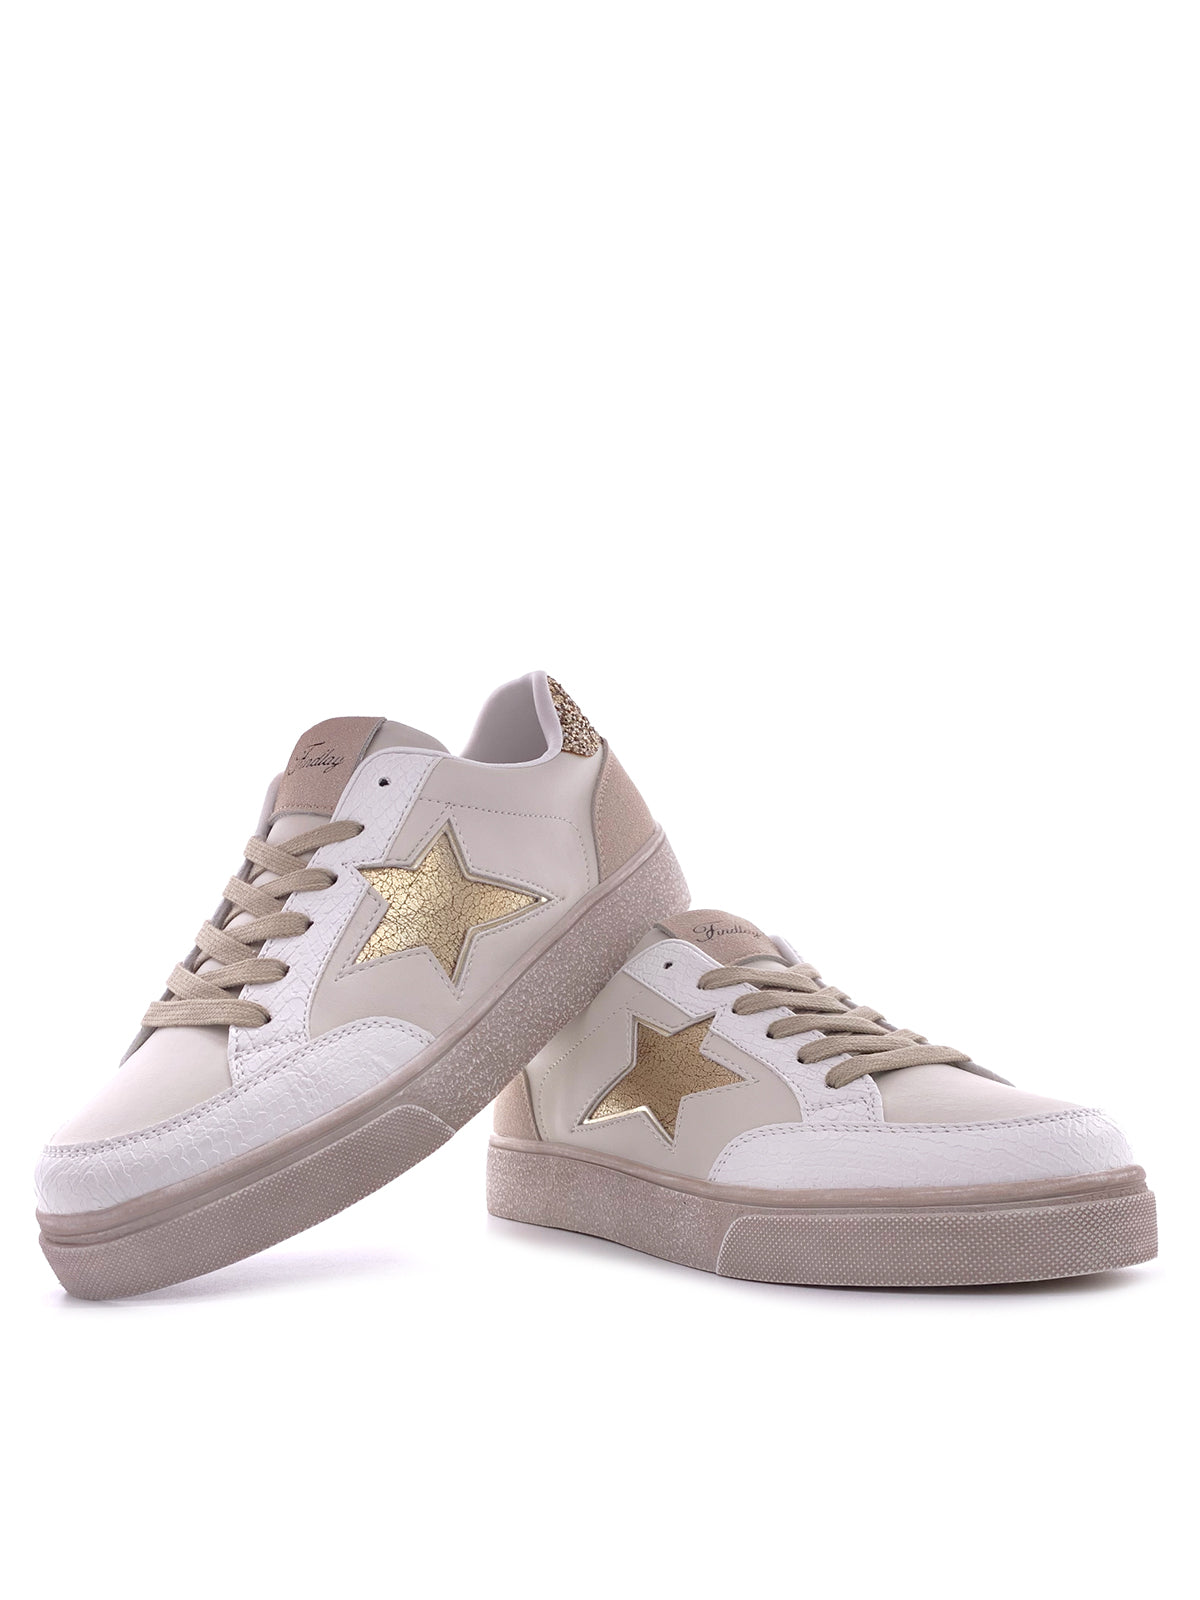 NICKY-Sneakers in ecopelle con stringhe e stella